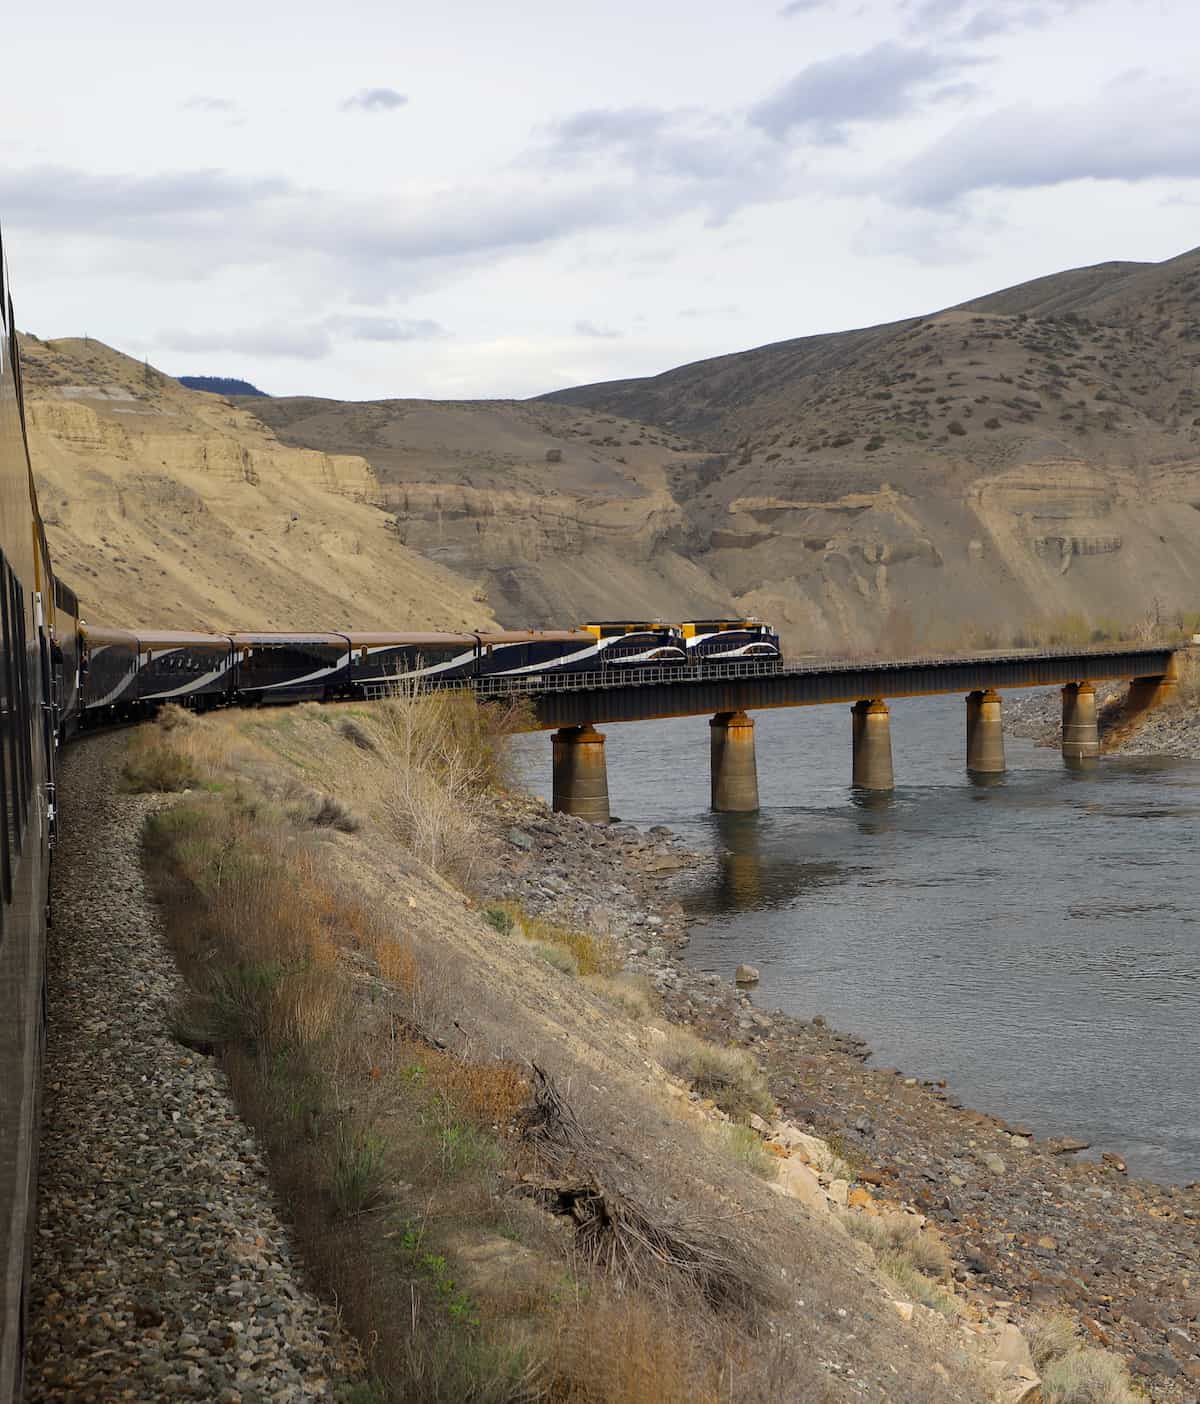 Rocky Mountaineer train going across bridge over water.